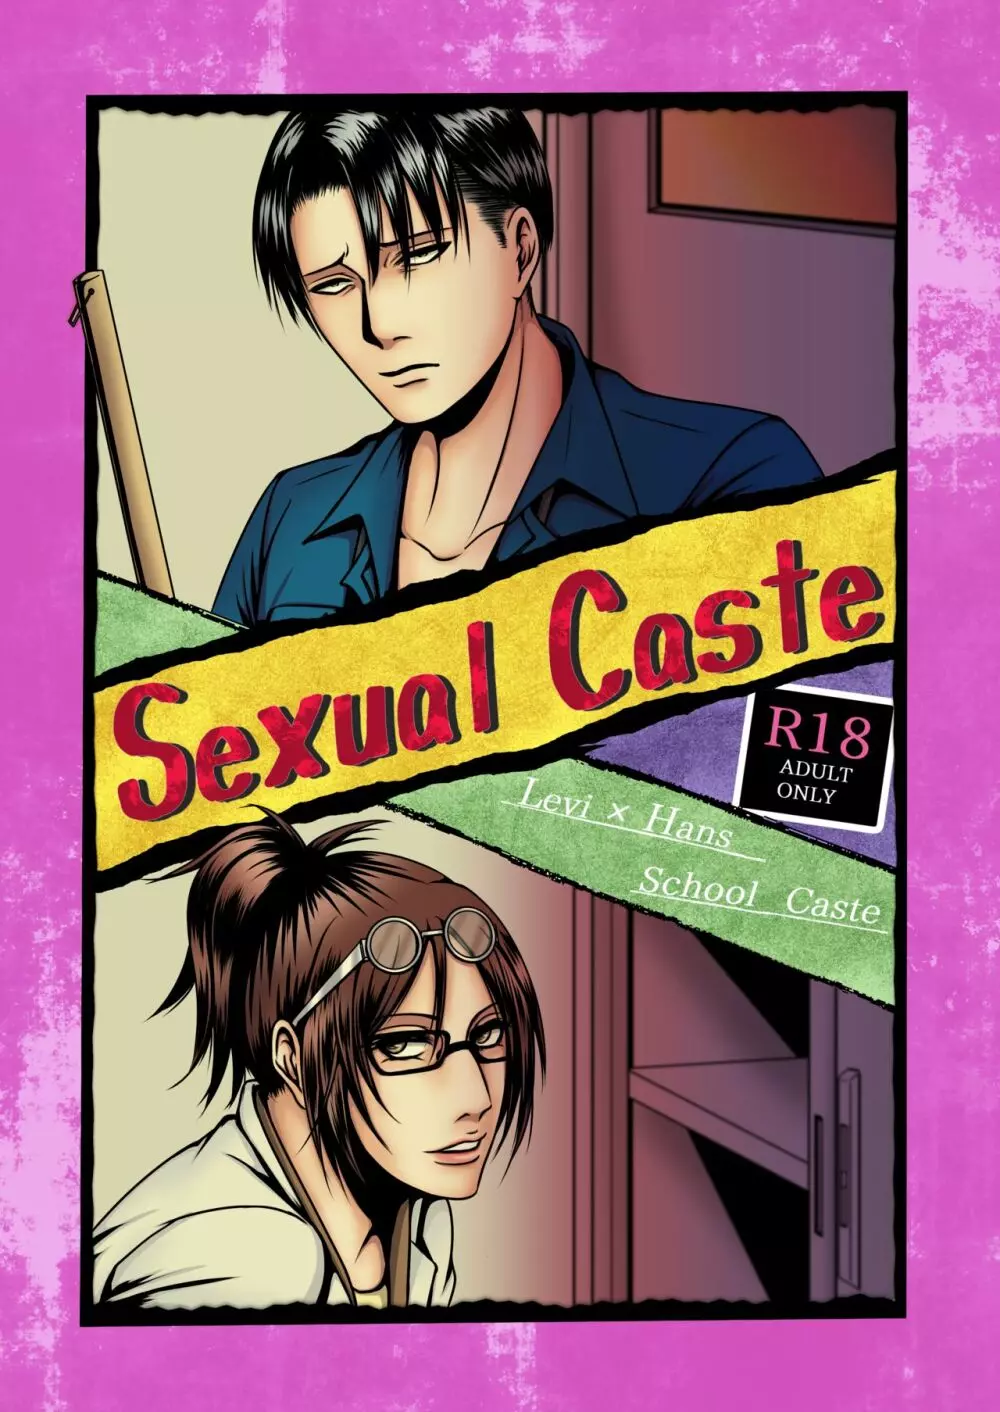 Sexual Caste